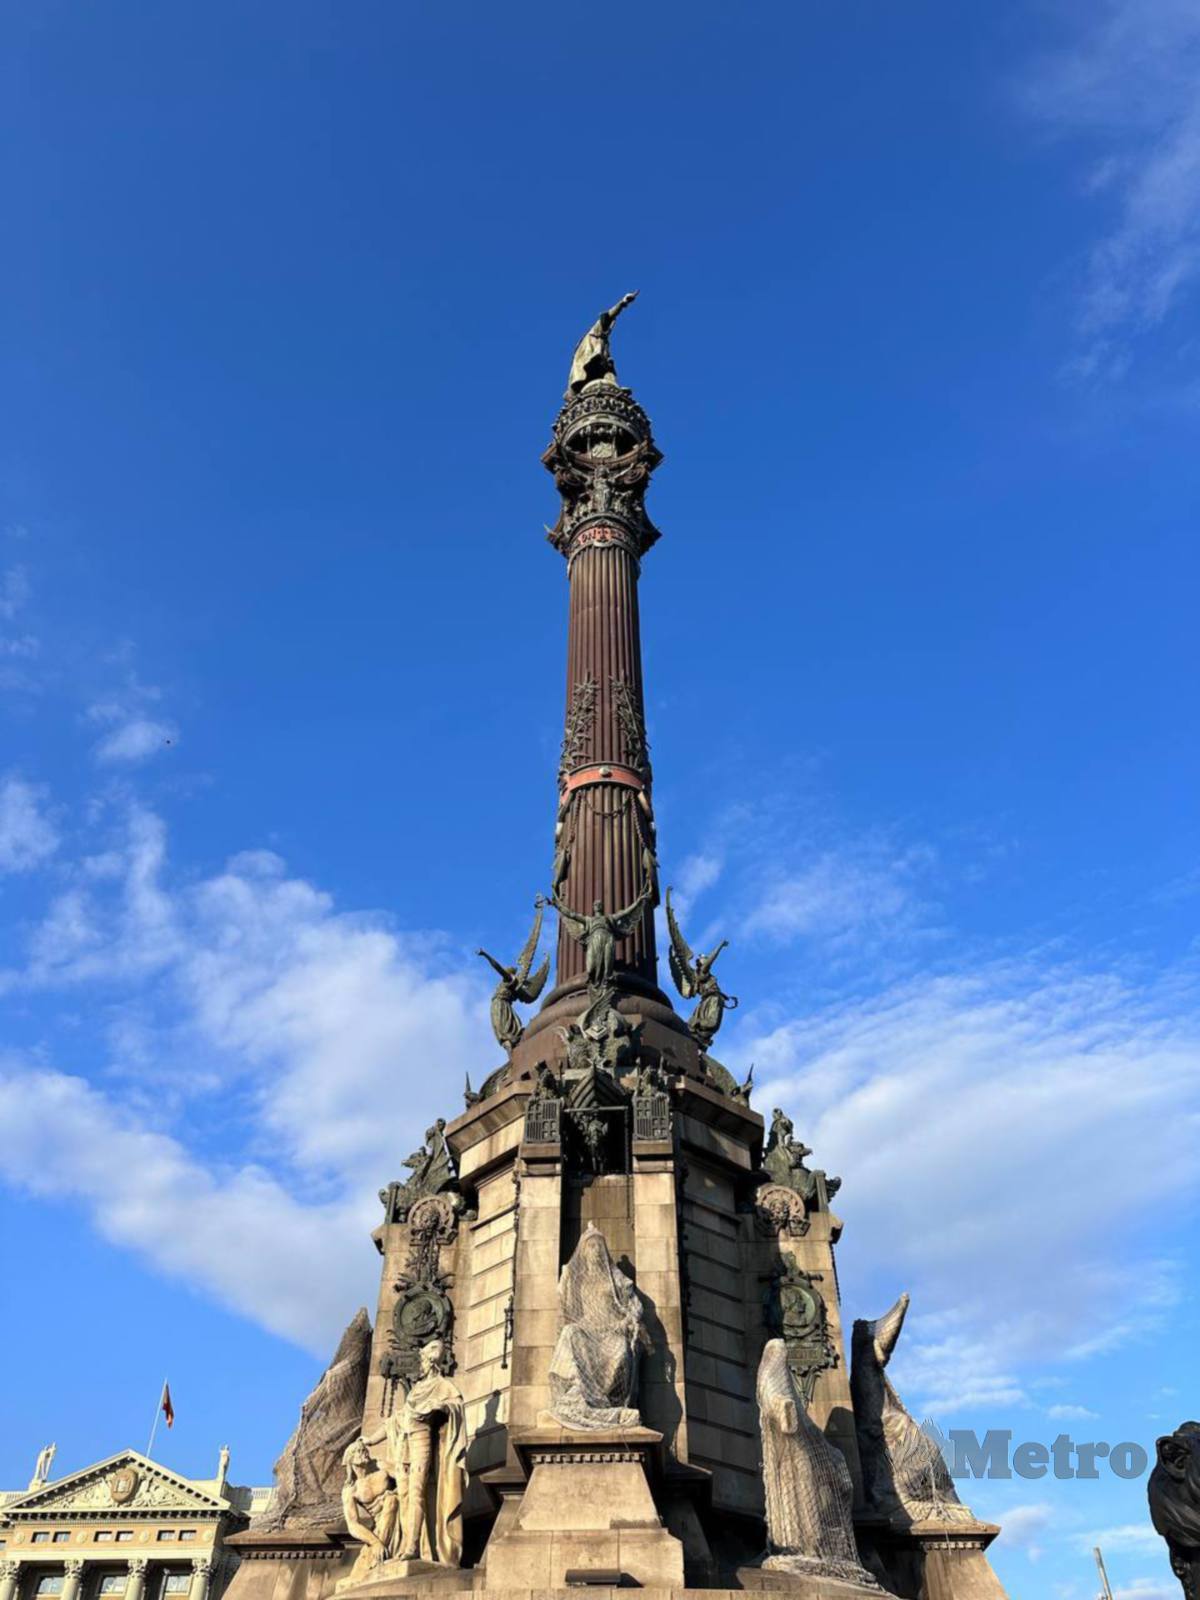 COLUMBUS Column di sepanjang laluan La Rambla yang memperlihatkan monumen Christopher Columbus menunjukkan arah ‘dunia baharu’.